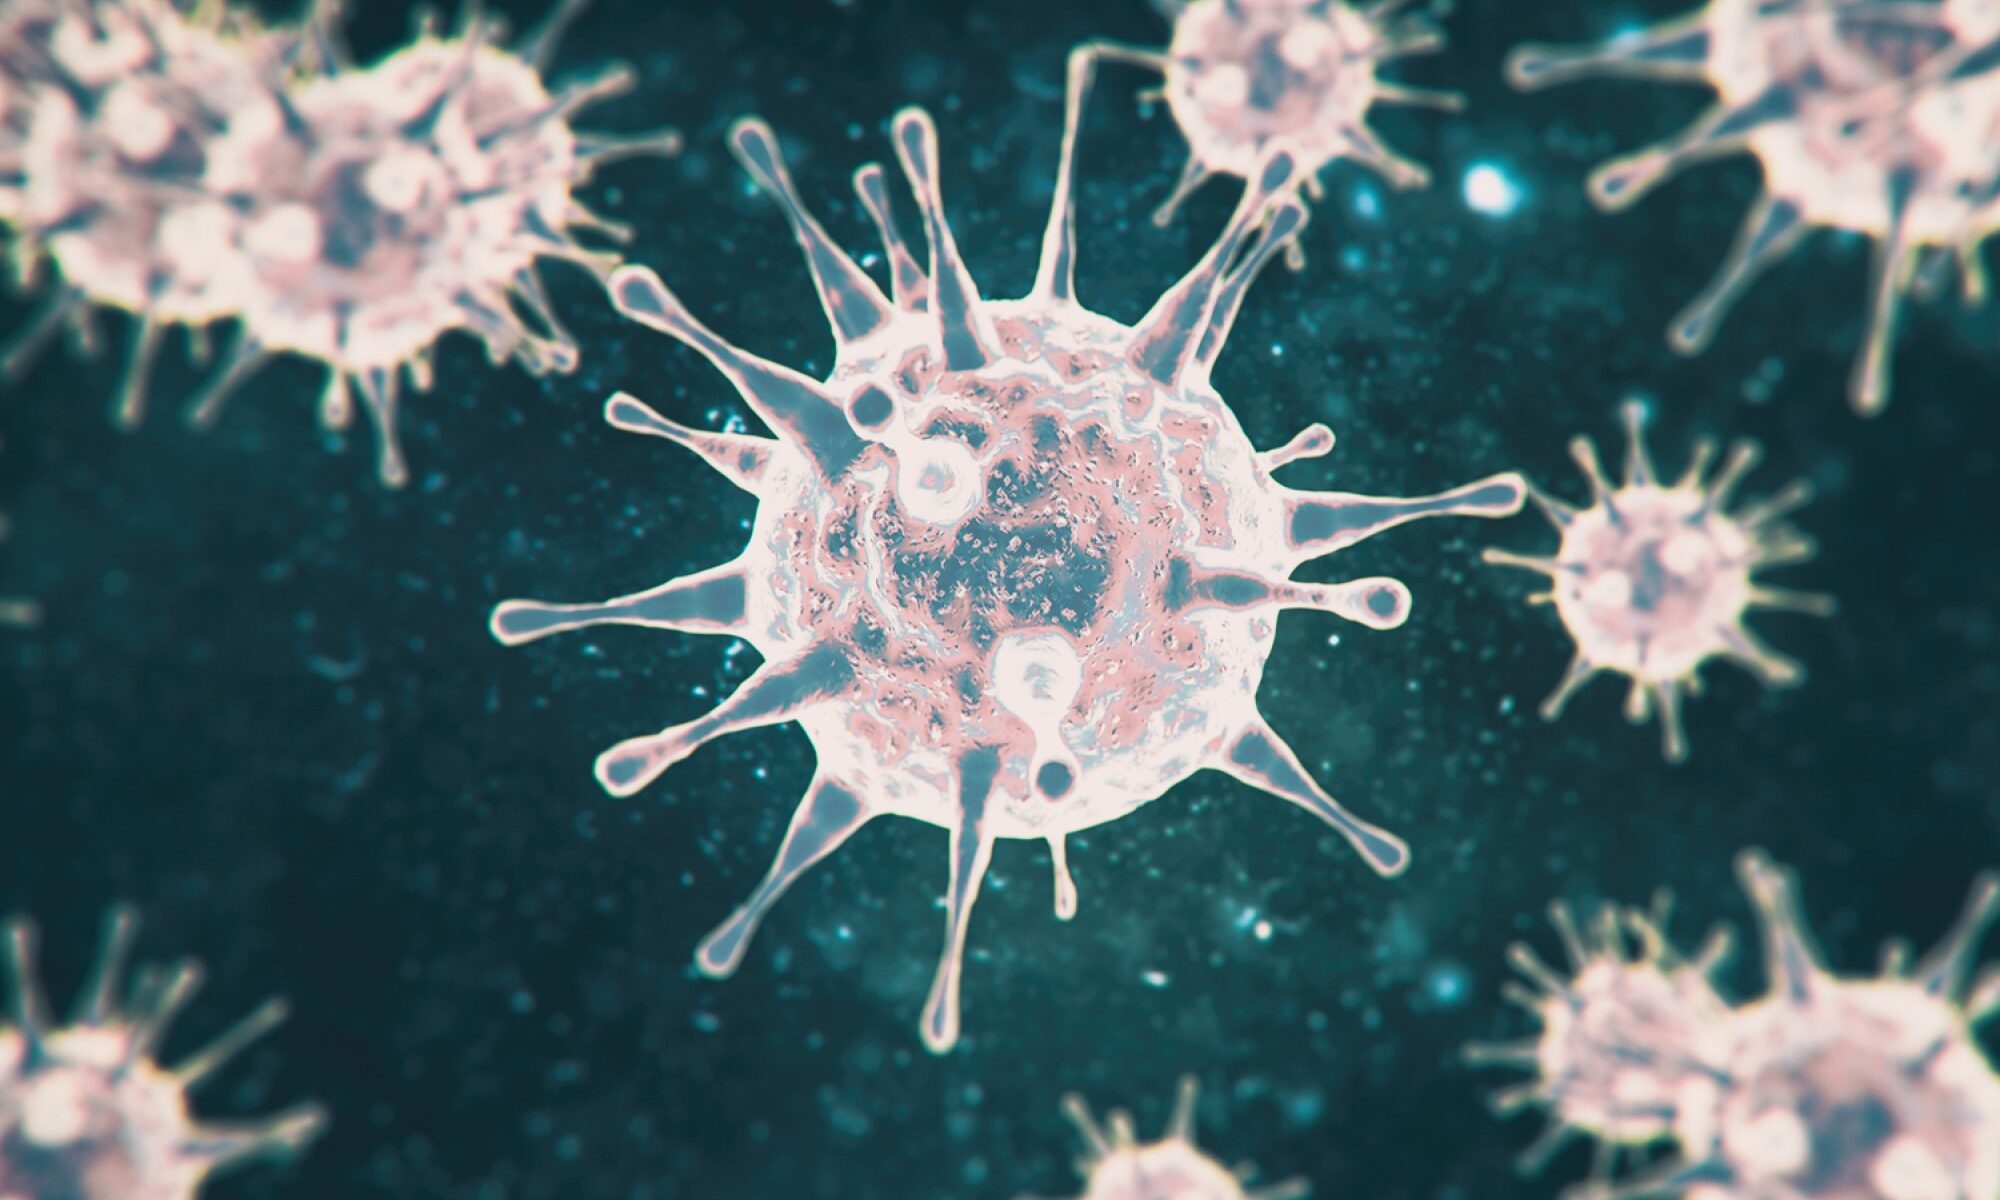 microscopic image of virus cells